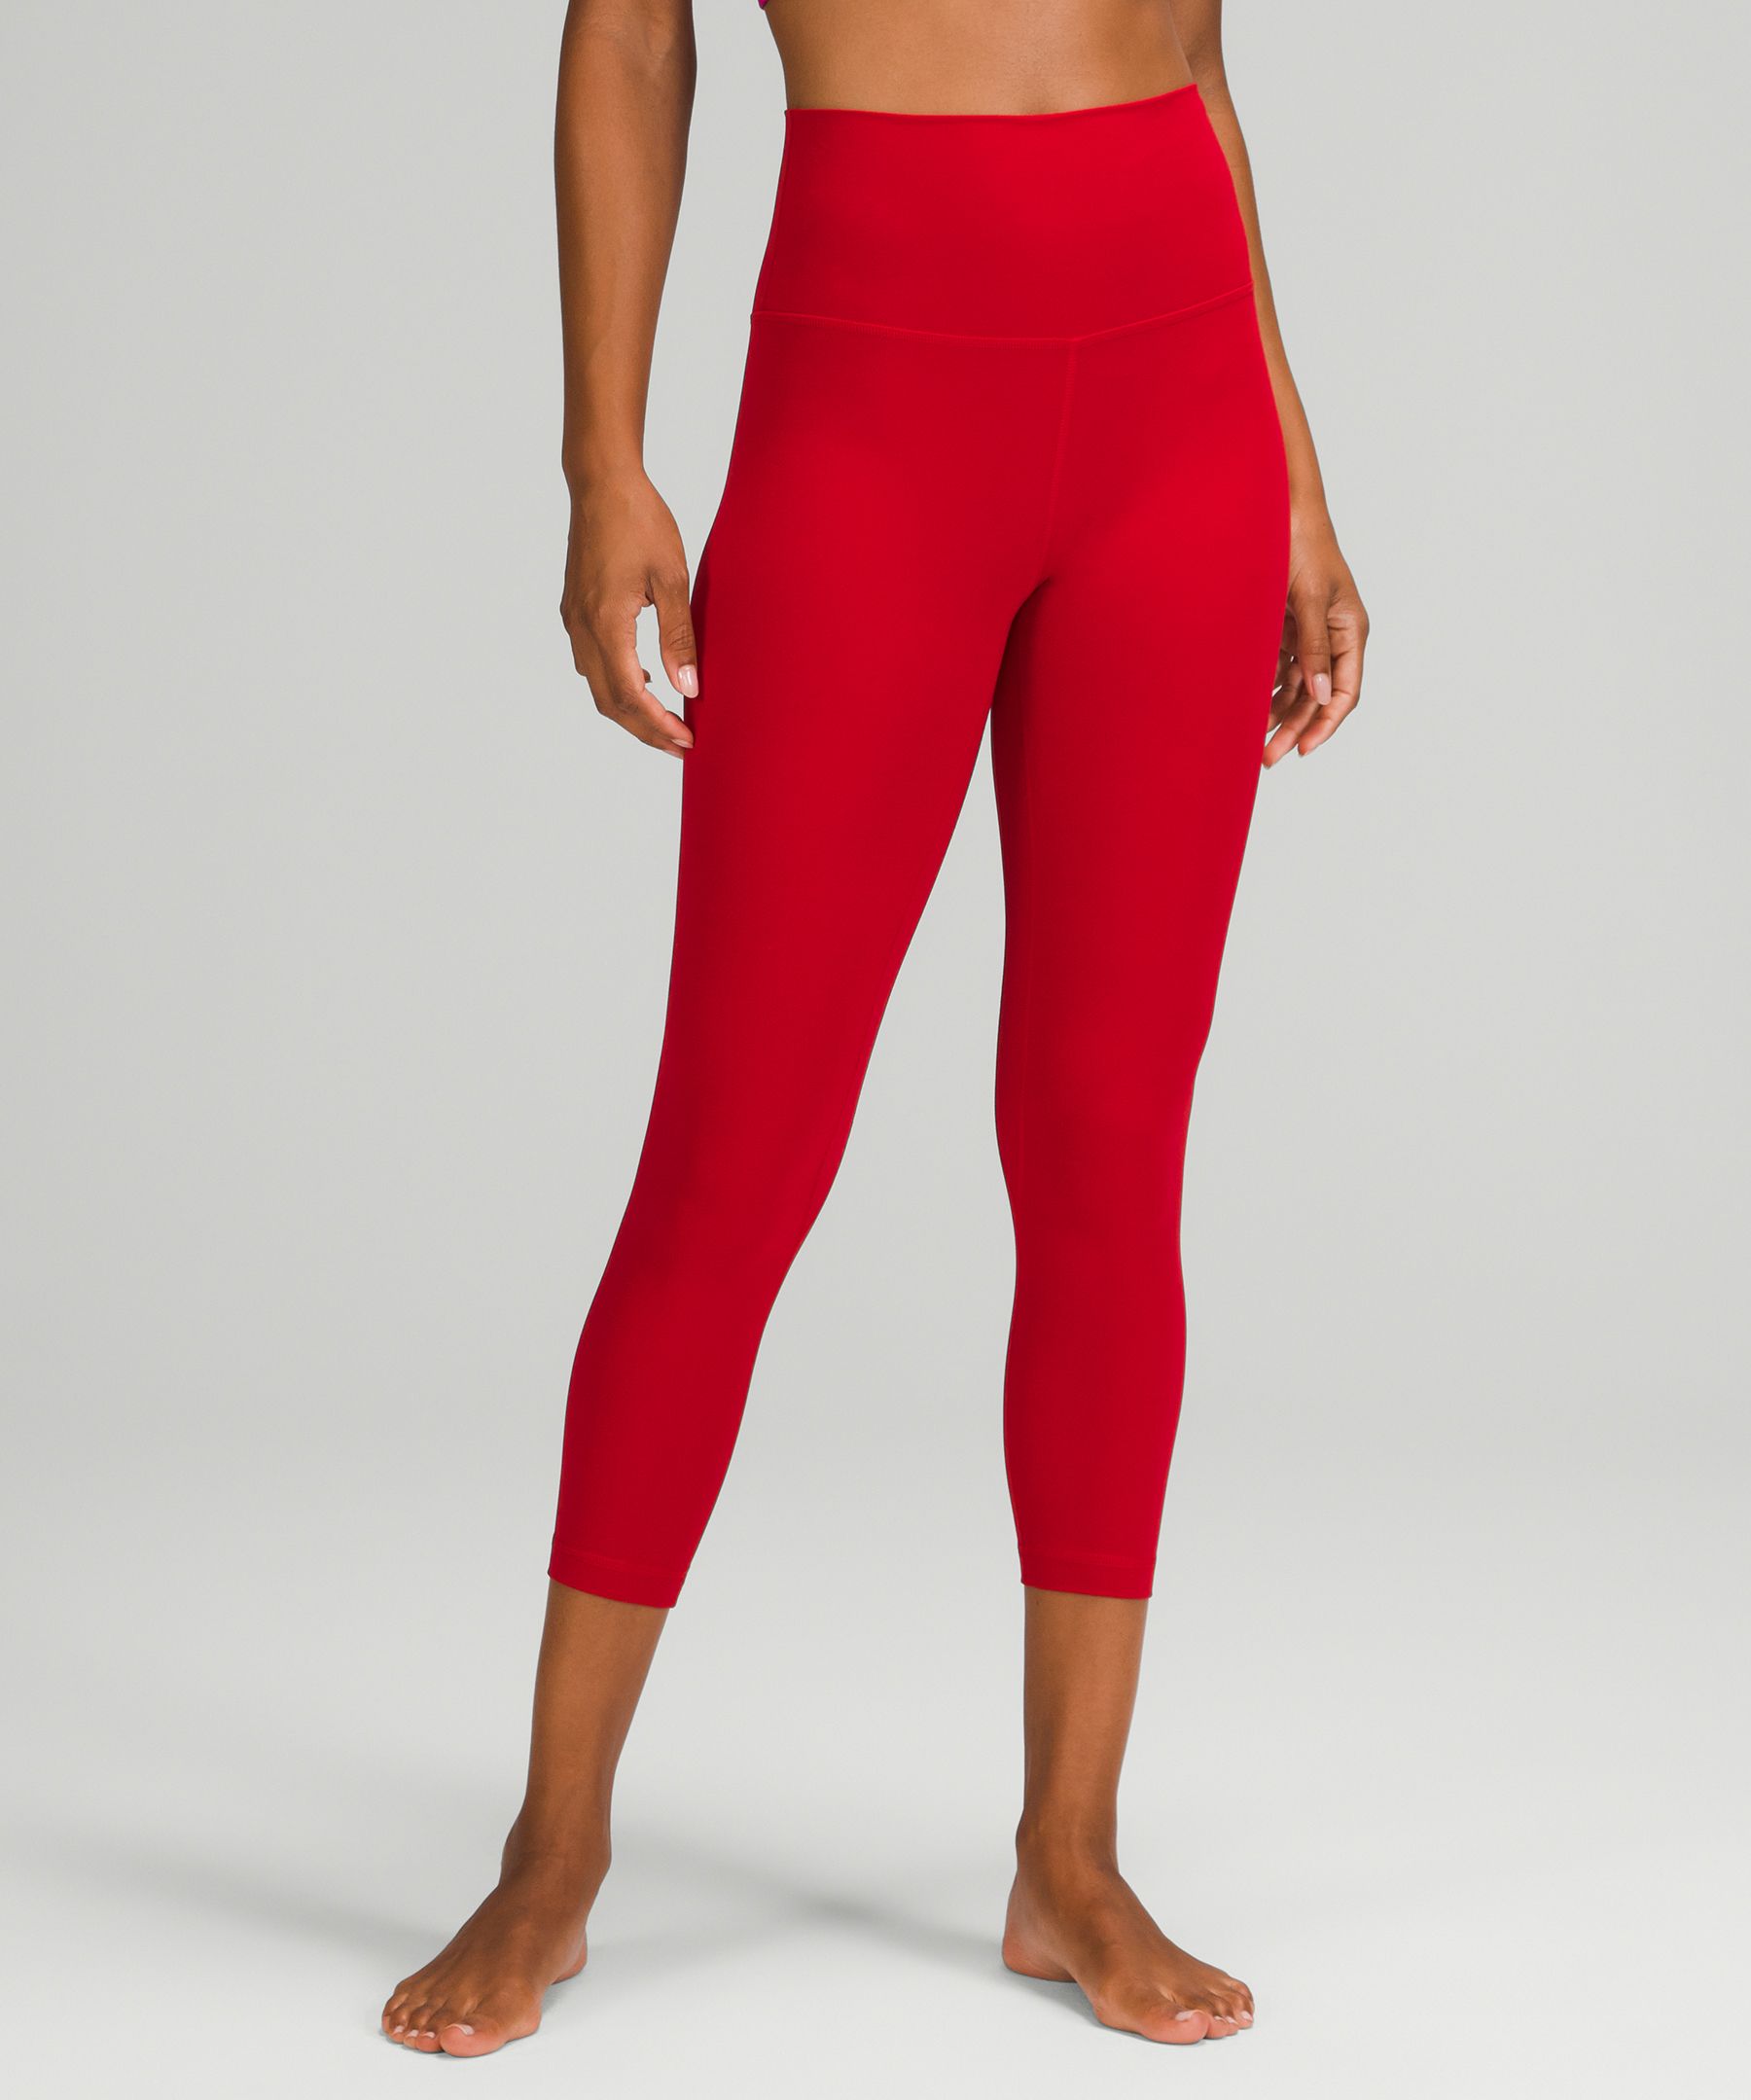 lululemon Women's Groove Super-High-Rise Crop 23 Nulu Leggings Pant Size 8  Yoga Pants SHR